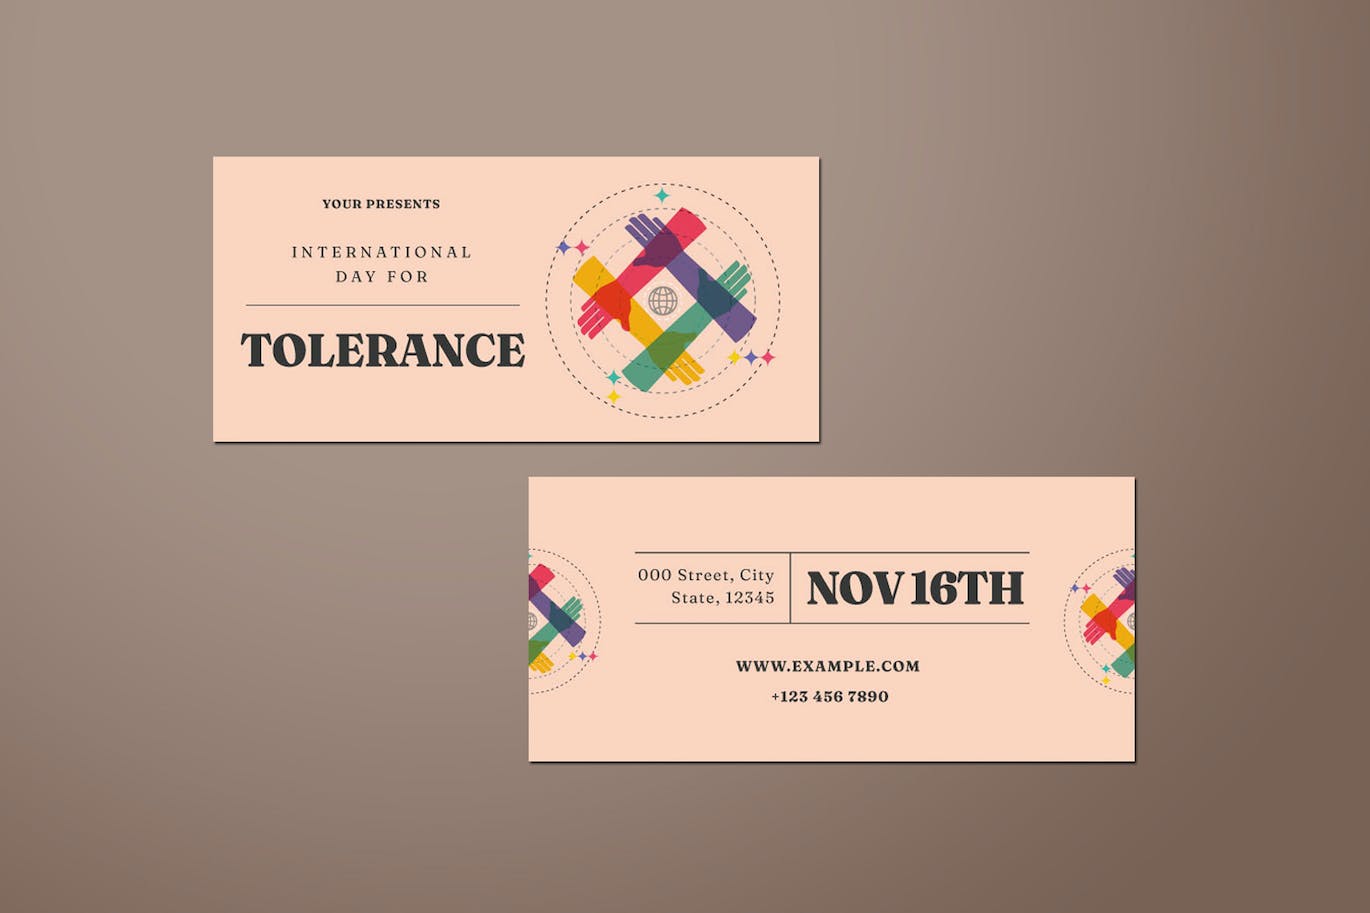 国际宽容日传单设计模板 International Day For Tolerance DL Flyer 设计素材 第4张